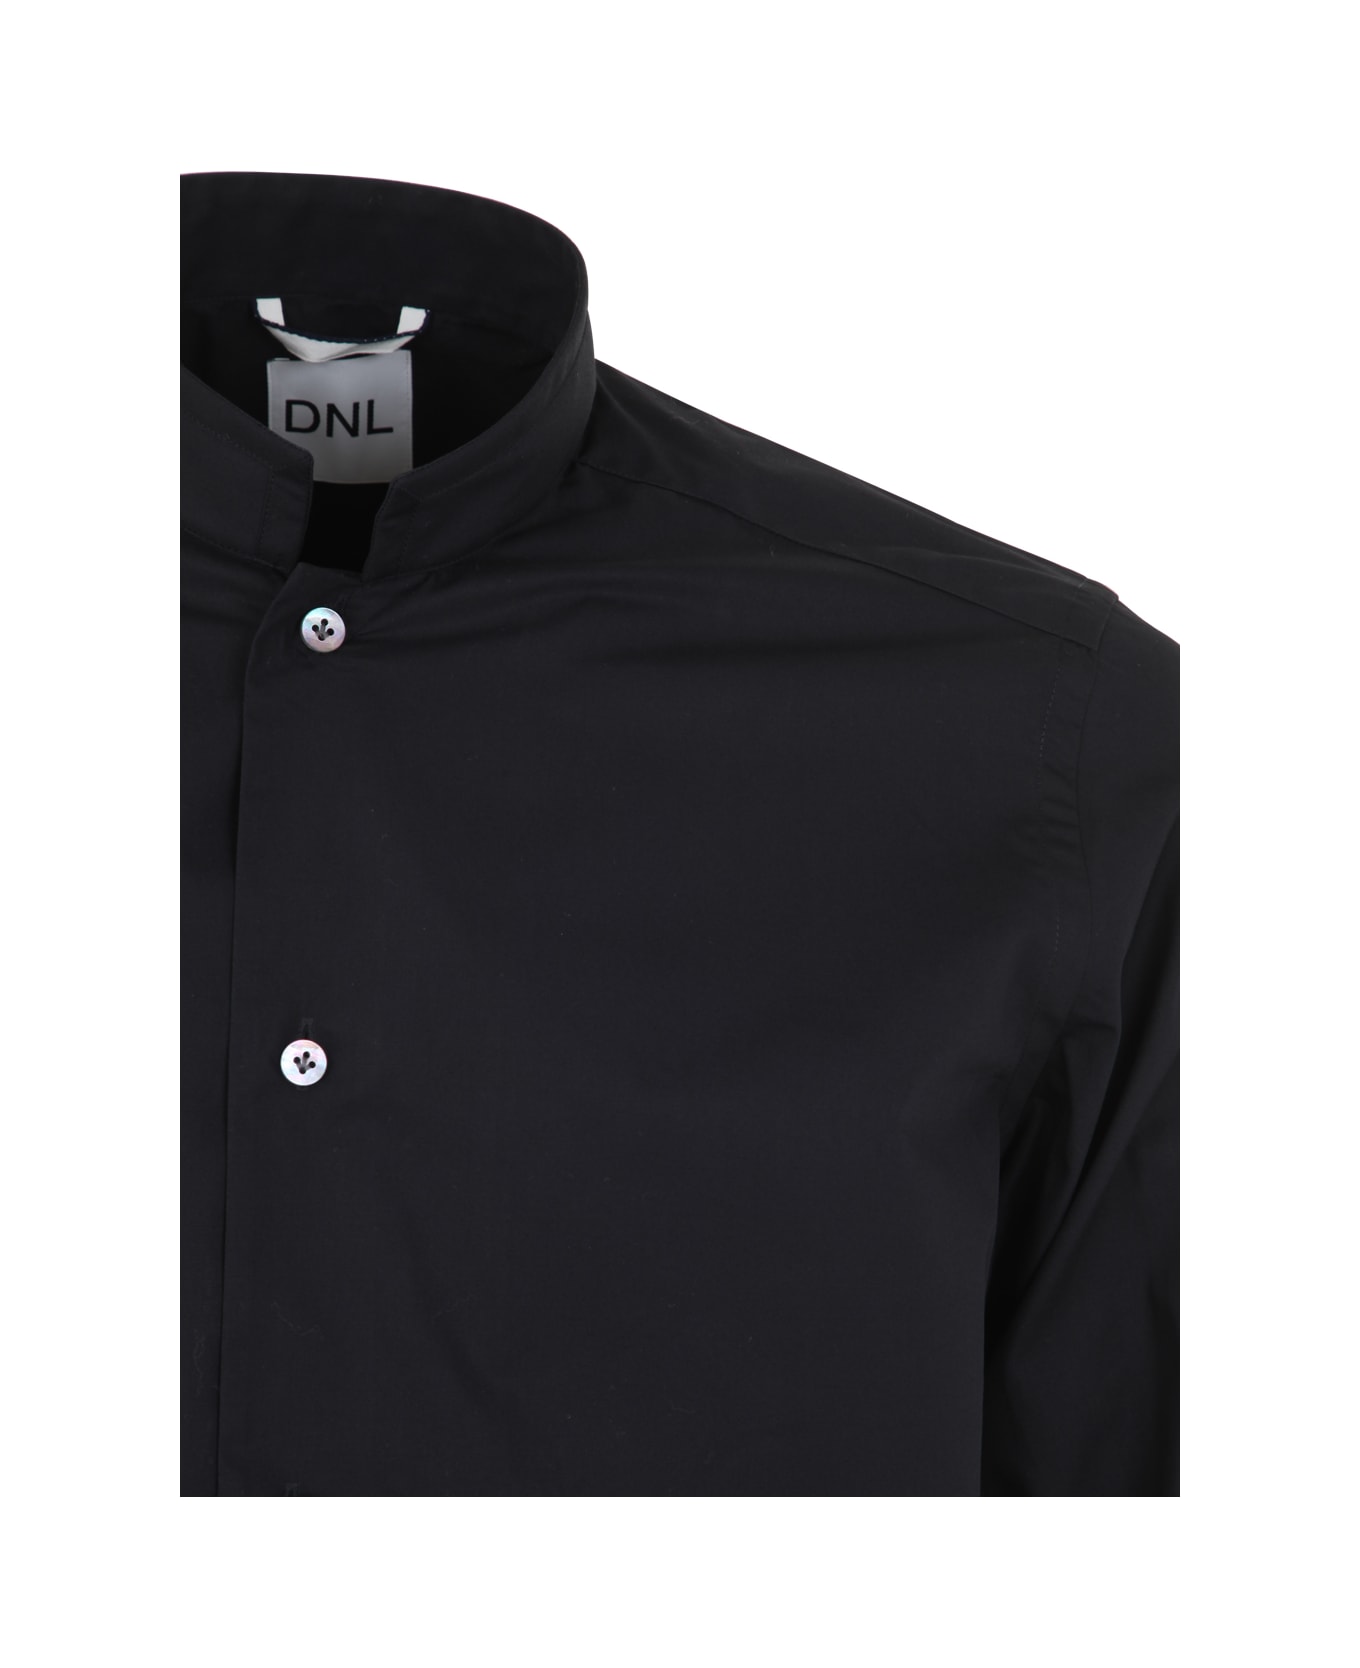 DNL Shirt - Black